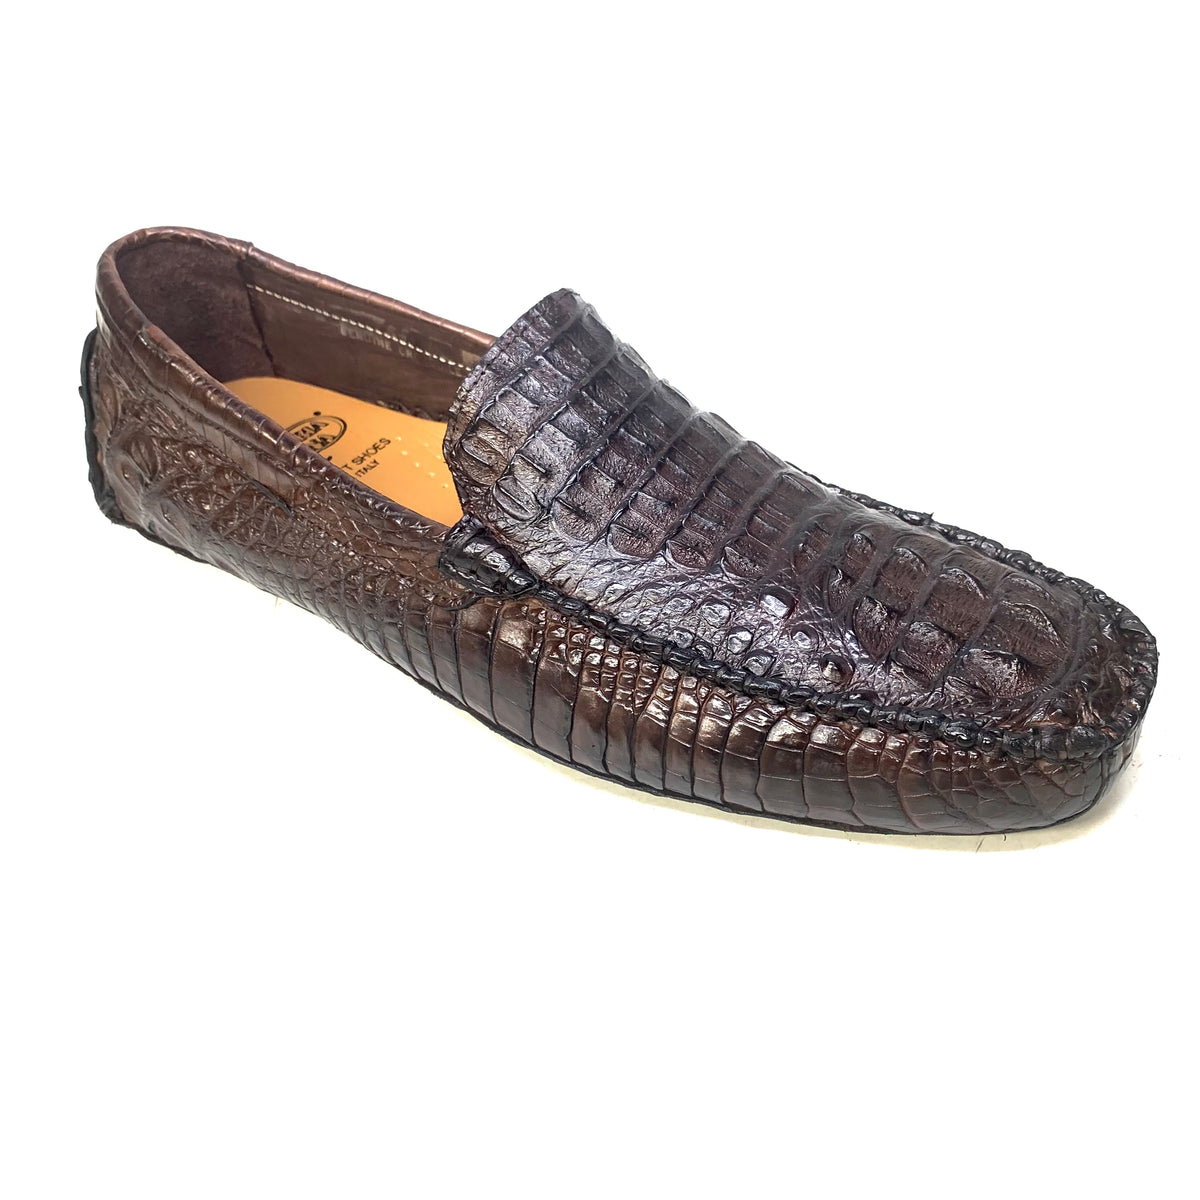 Calzoleria Toscana 4551 Crocodile Driving Shoes